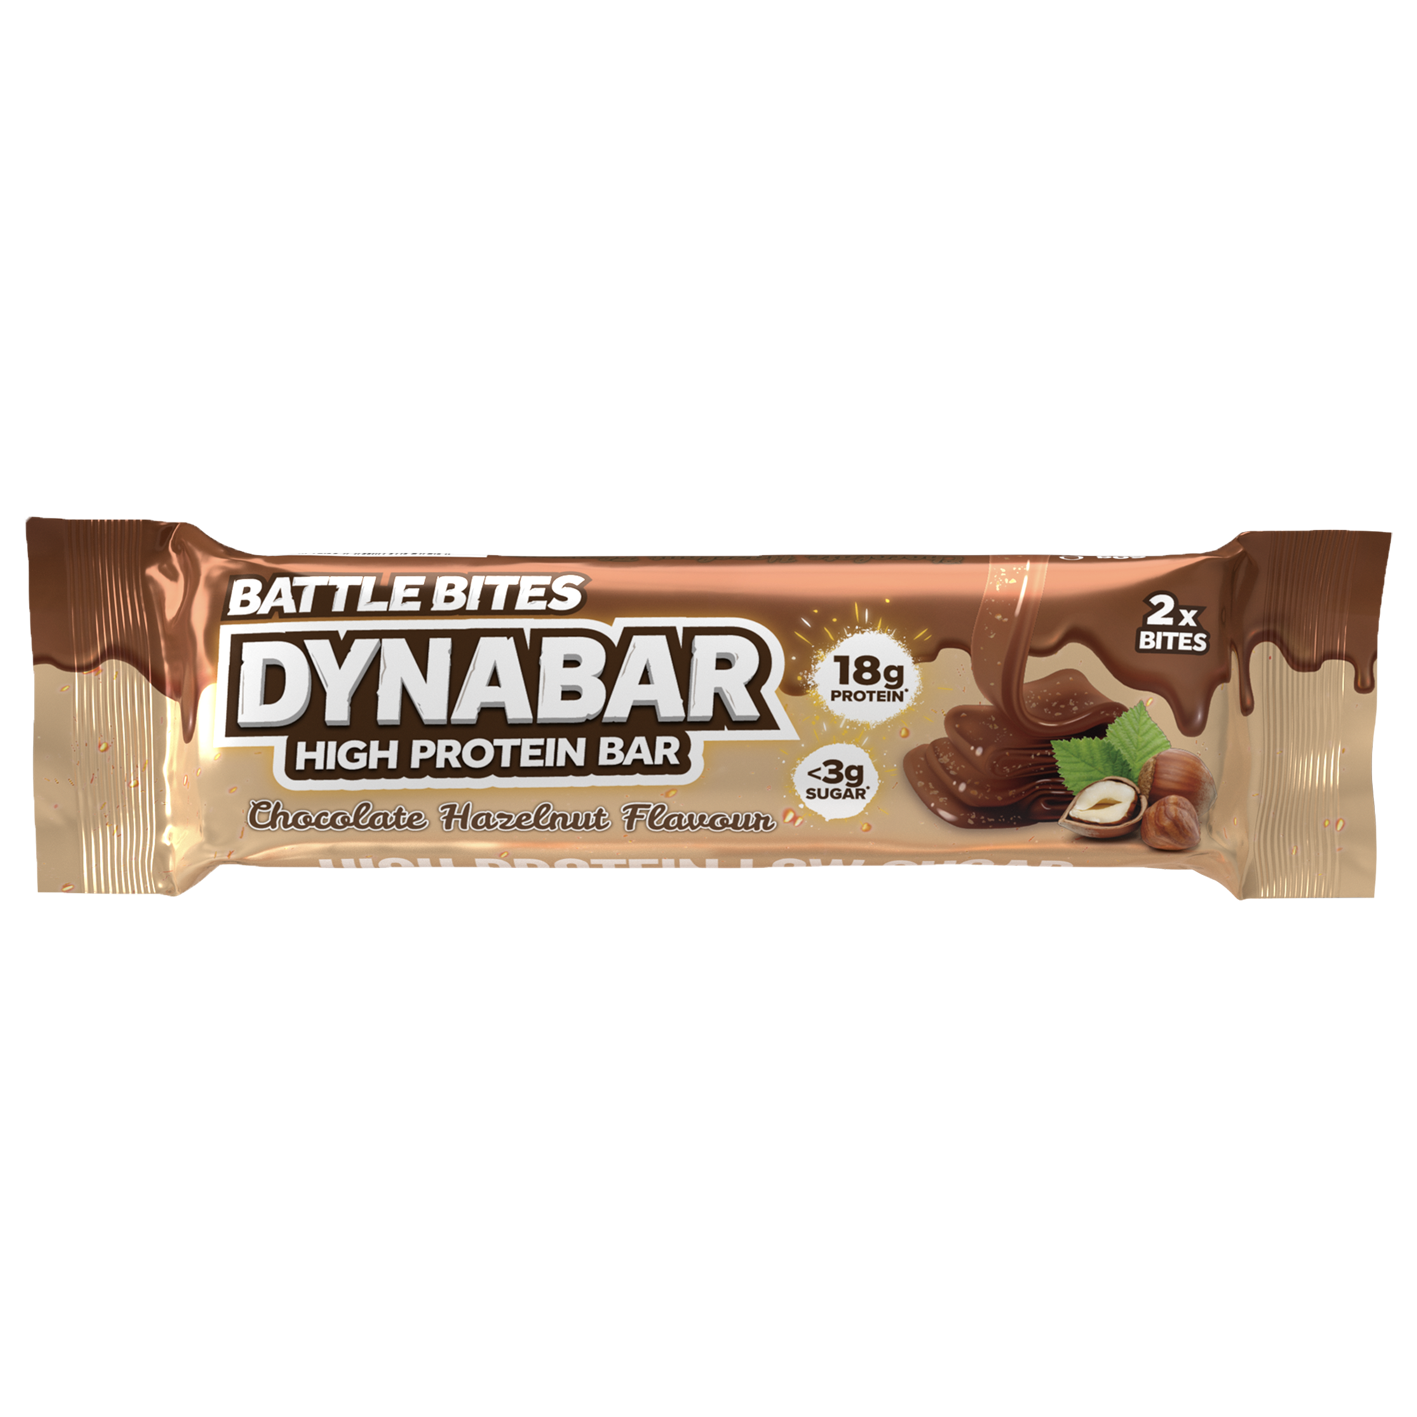 Battle Bites DynaBar Chocolate Avellana 60g - Precio por caja de 12